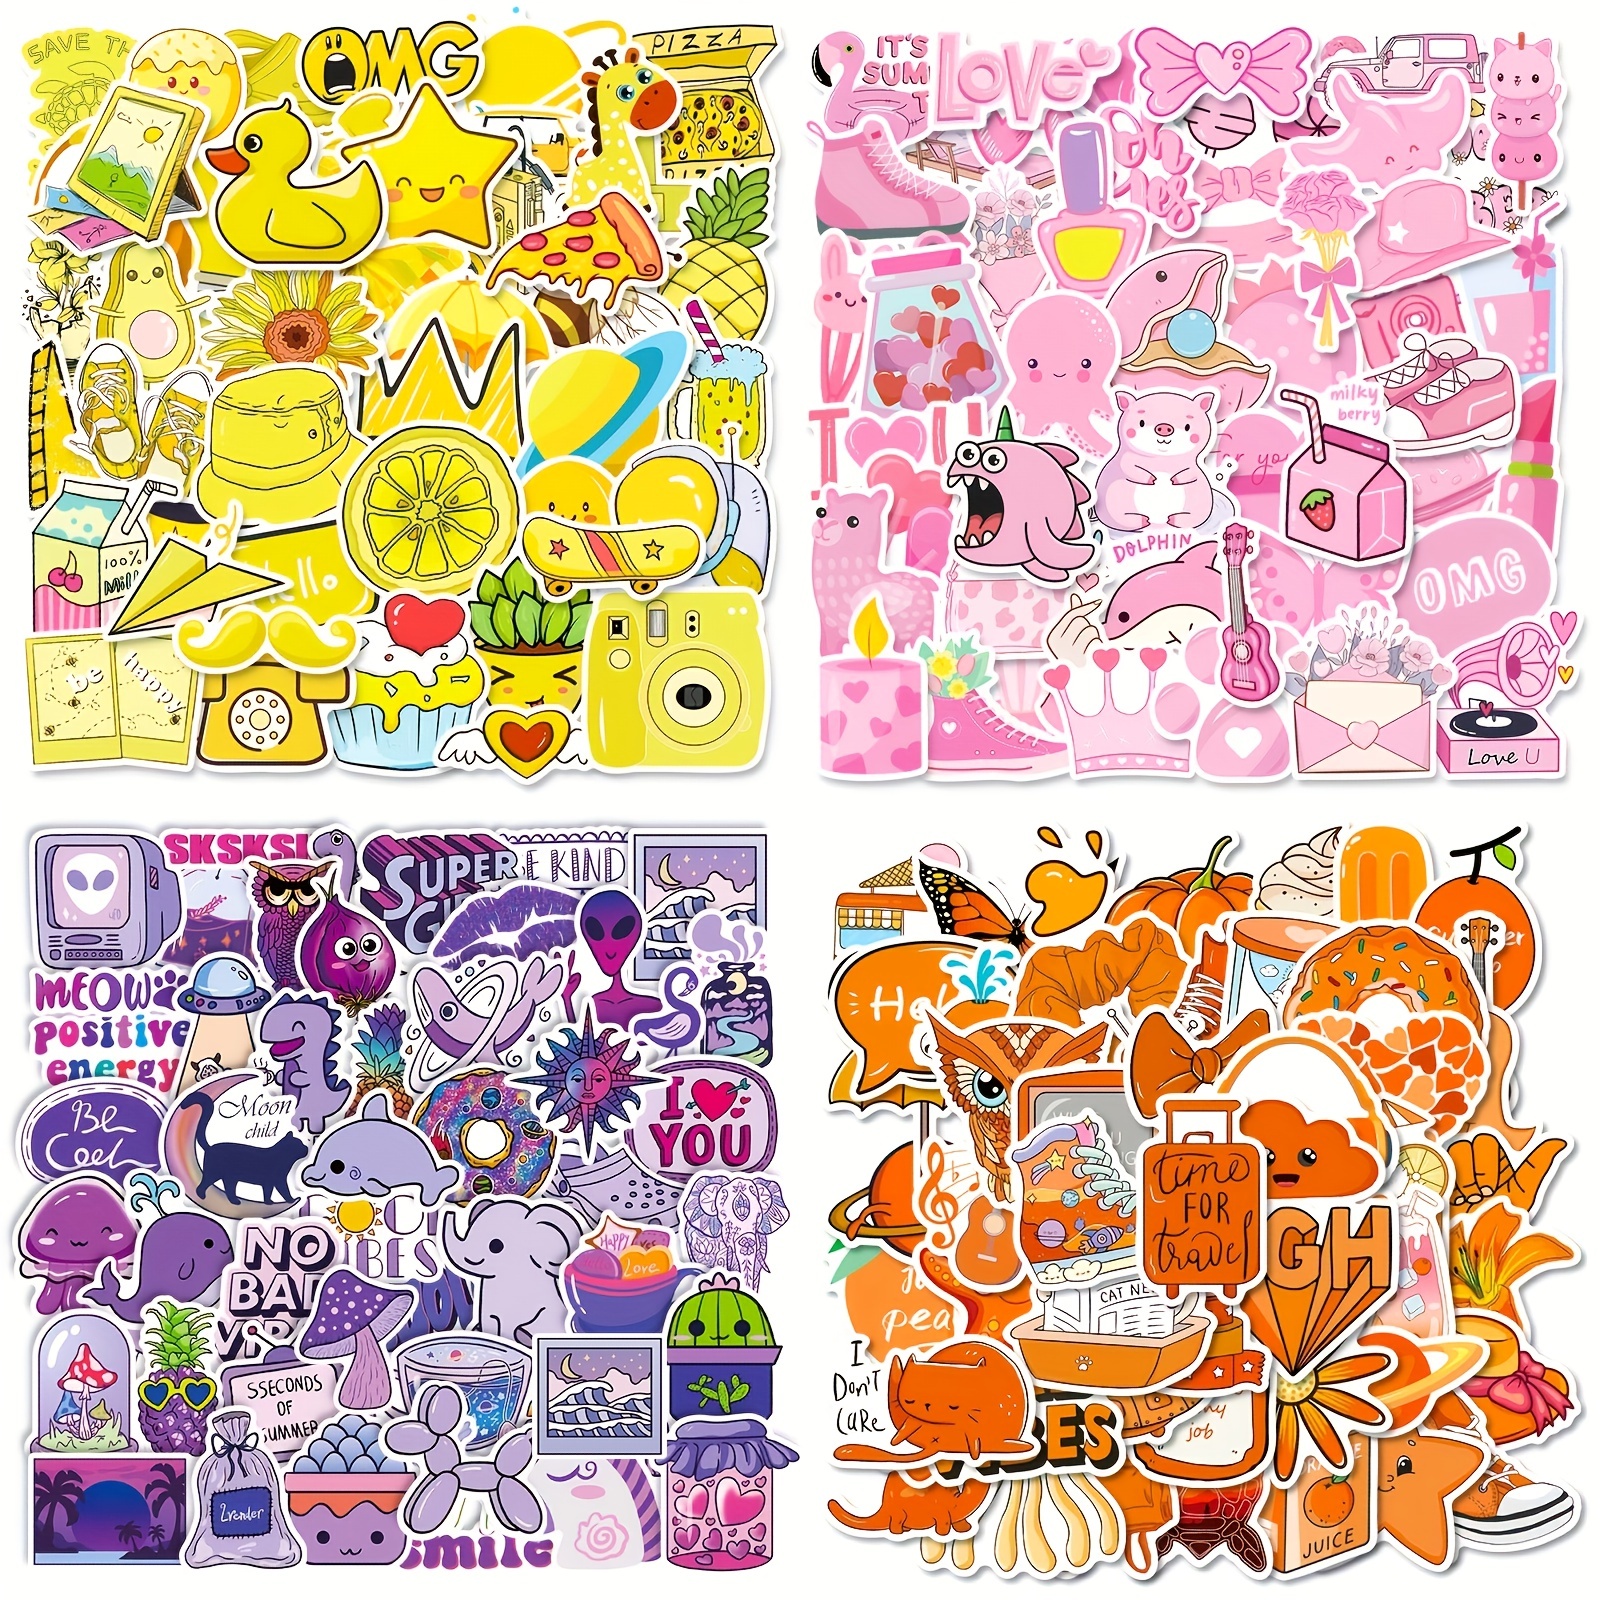 500 Pcs Random Stickers Pack, Colorful Vinyl Waterproof Stickers